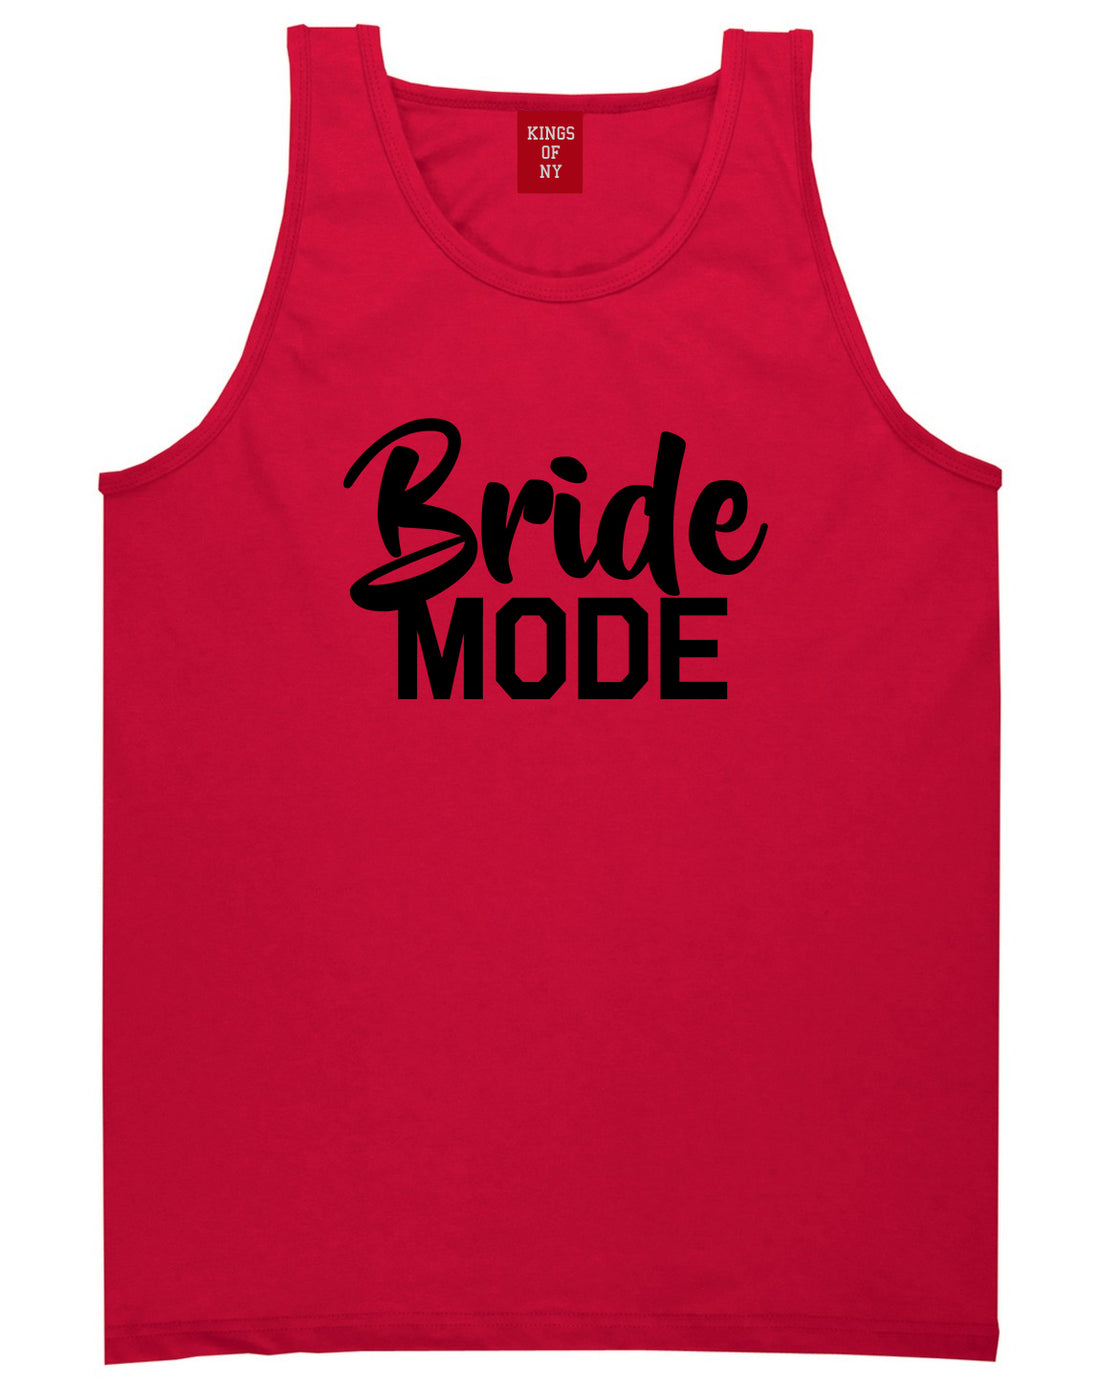 Bride Mode Bridal Mens Red Tank Top Shirt by KINGS OF NY